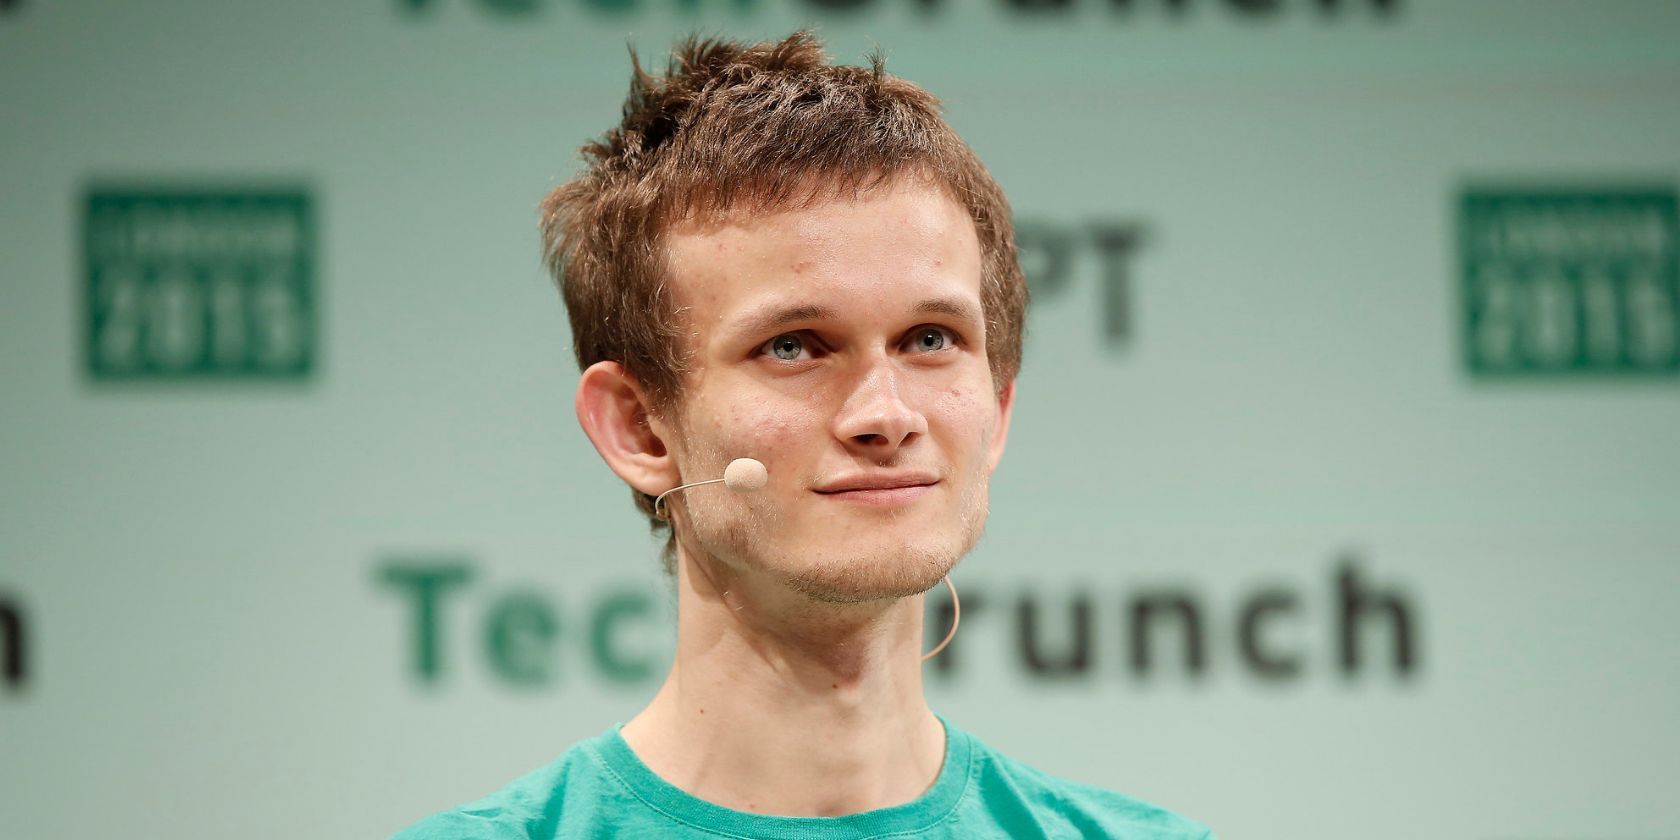 Why Did Ethereum Founder Vitalik Buterin Dump $700K in Altcoins?